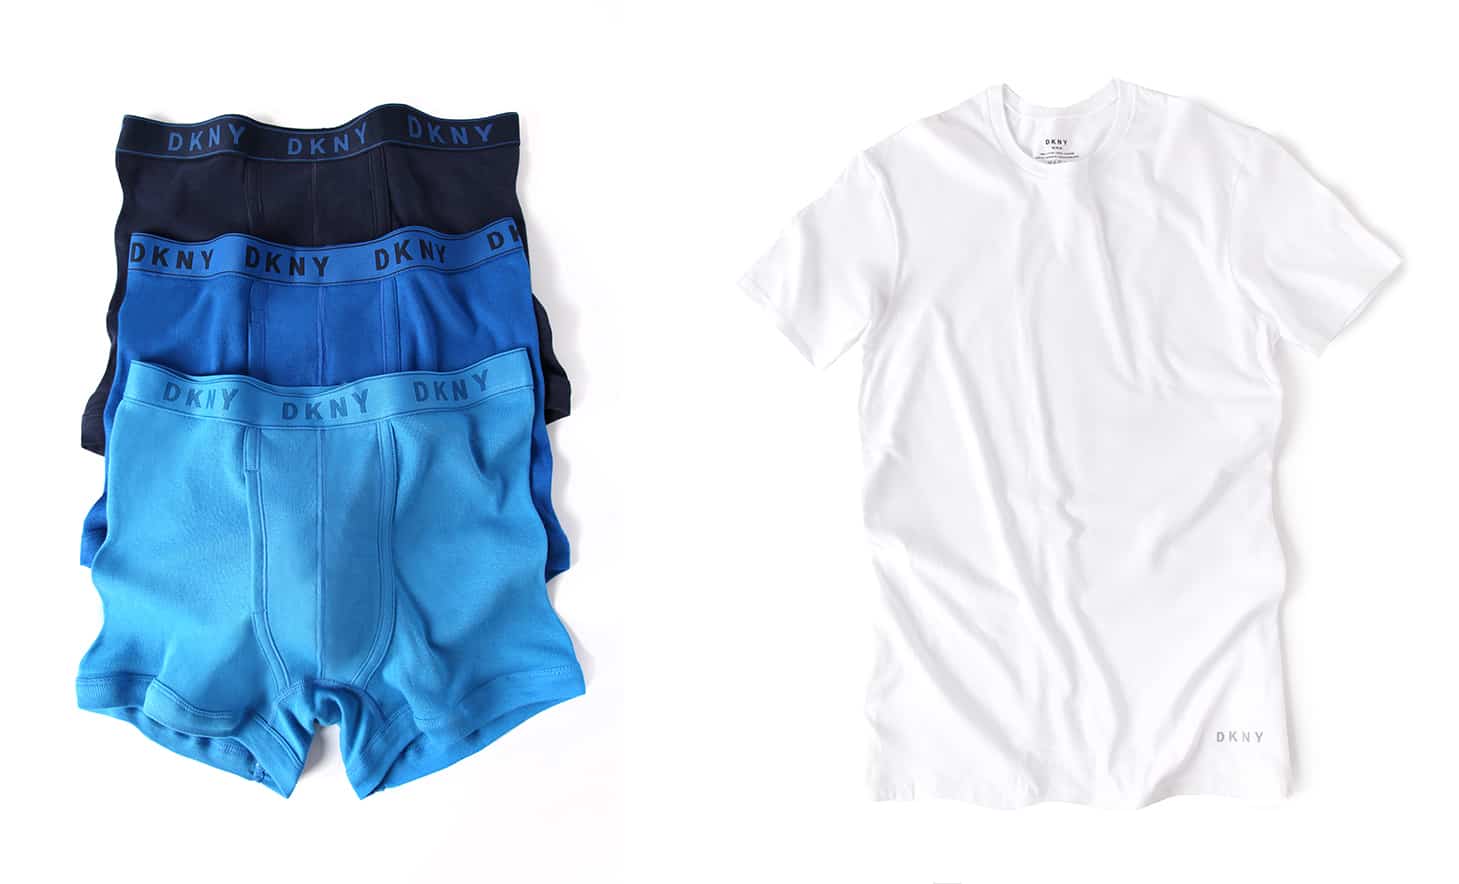 DKNY Licenses H. Best for Men's Underwear